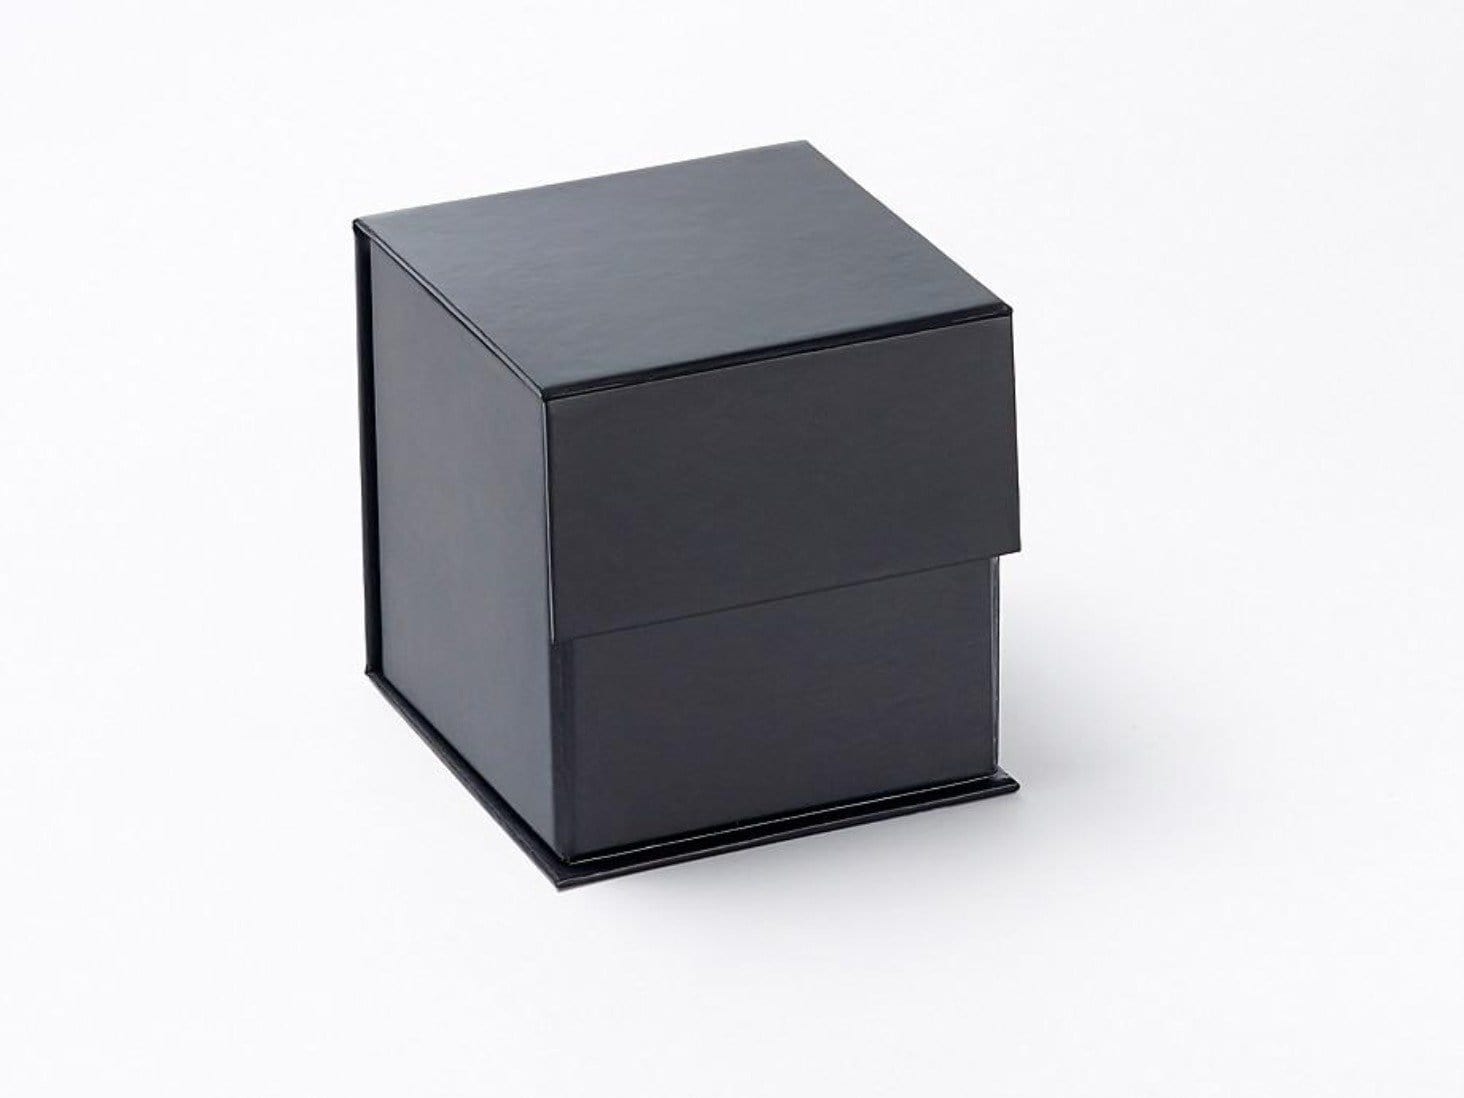 Sample Black Small Cube Gift Box without ribbon from Foldabox UK